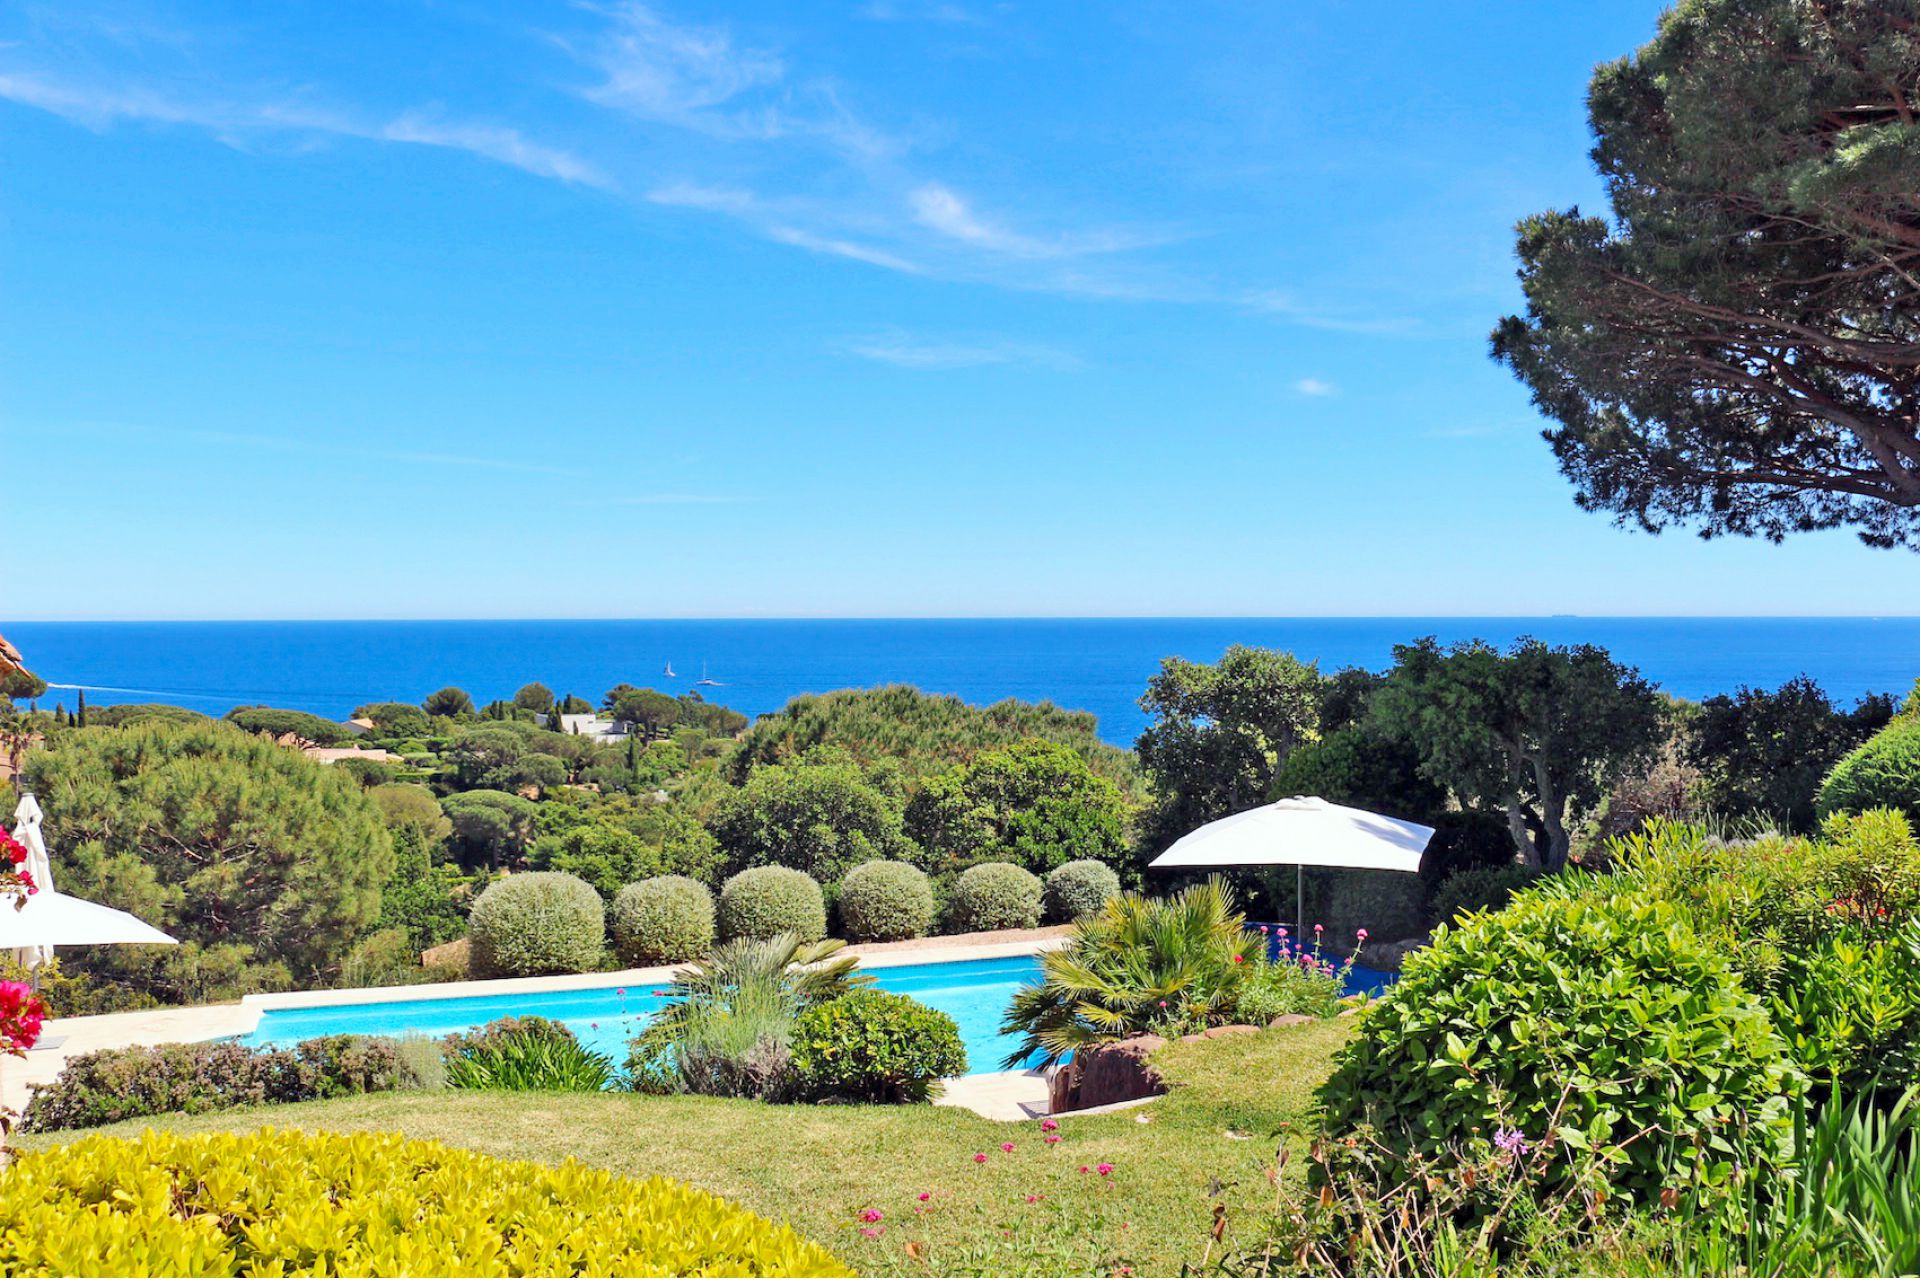 Méditerranée Location Villa with Private pool in Ramatuelle, Côte d'Azur